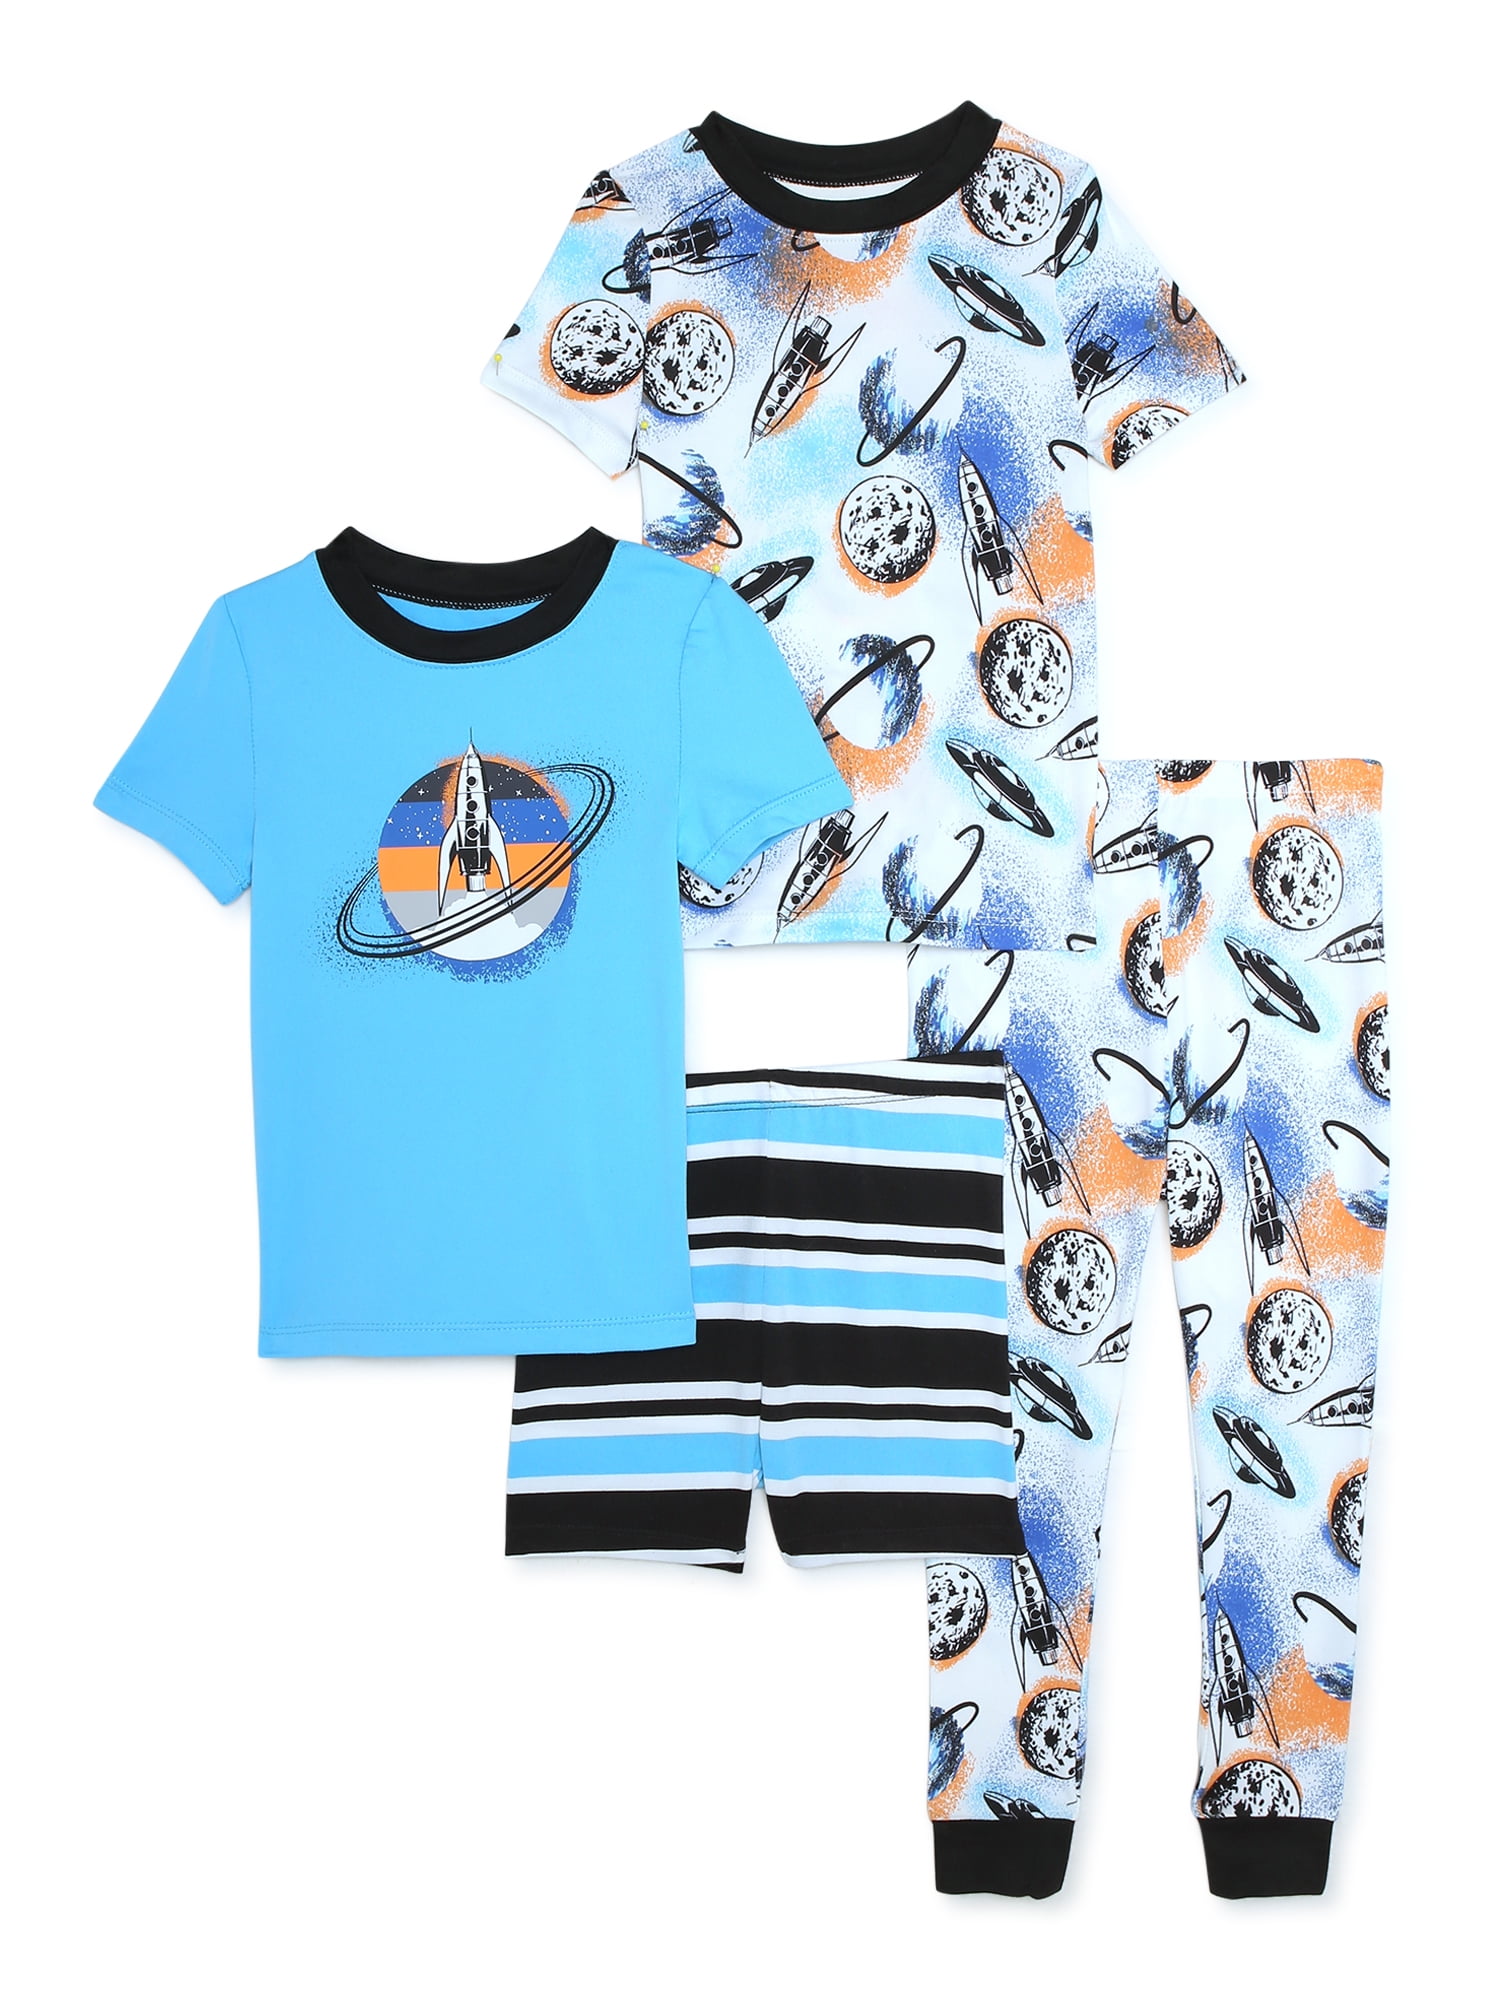 Star Wars Pyjama Blue 18 Months Boy DressInn Boys Clothing Loungewear Pajamas 